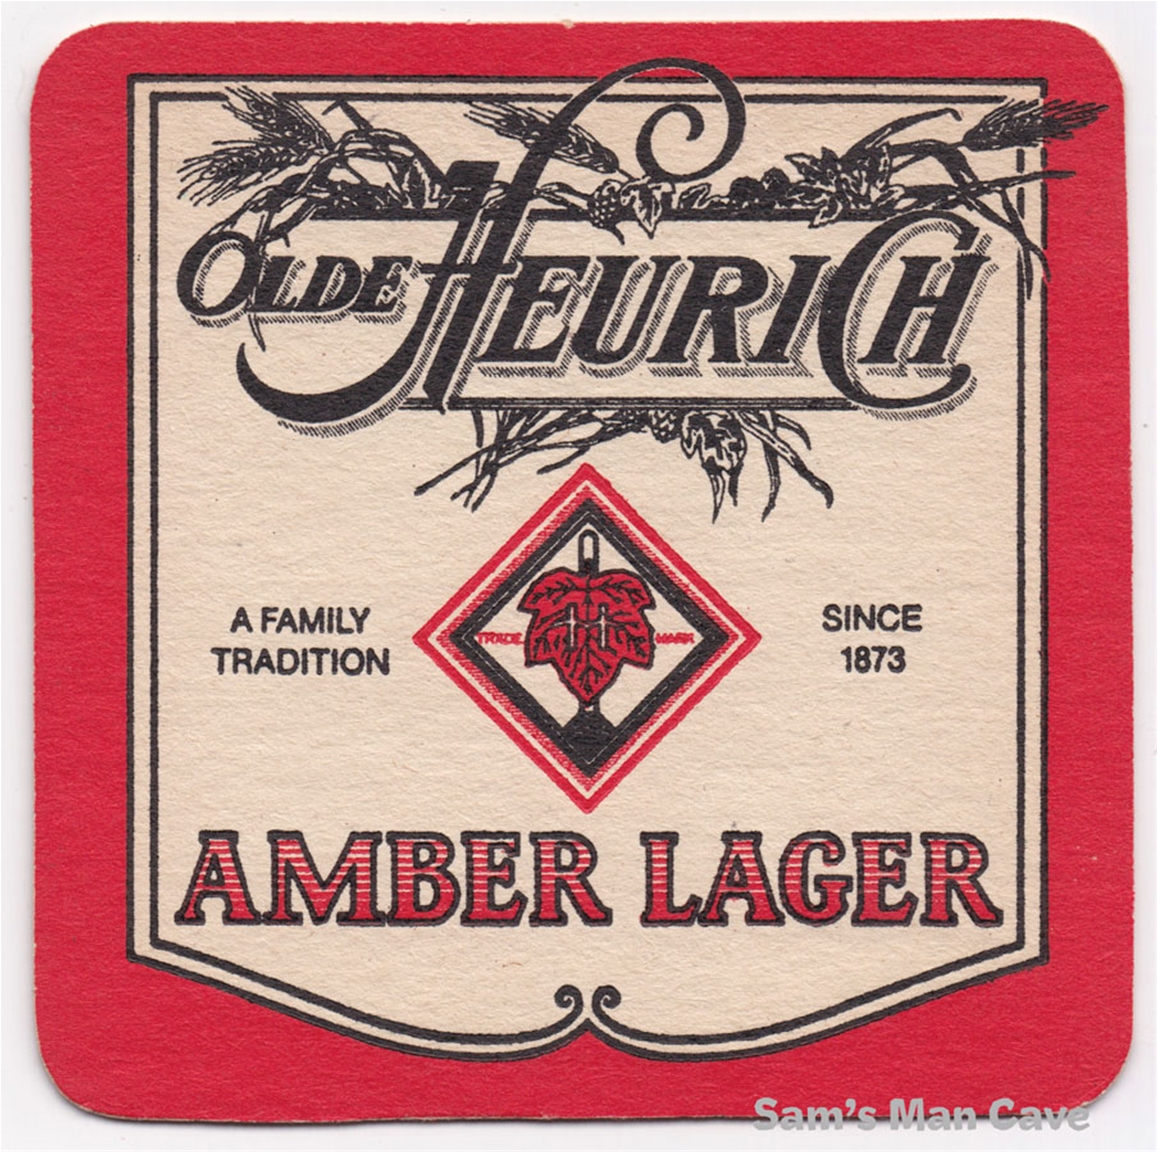 Olde Heurich Beer Coaster